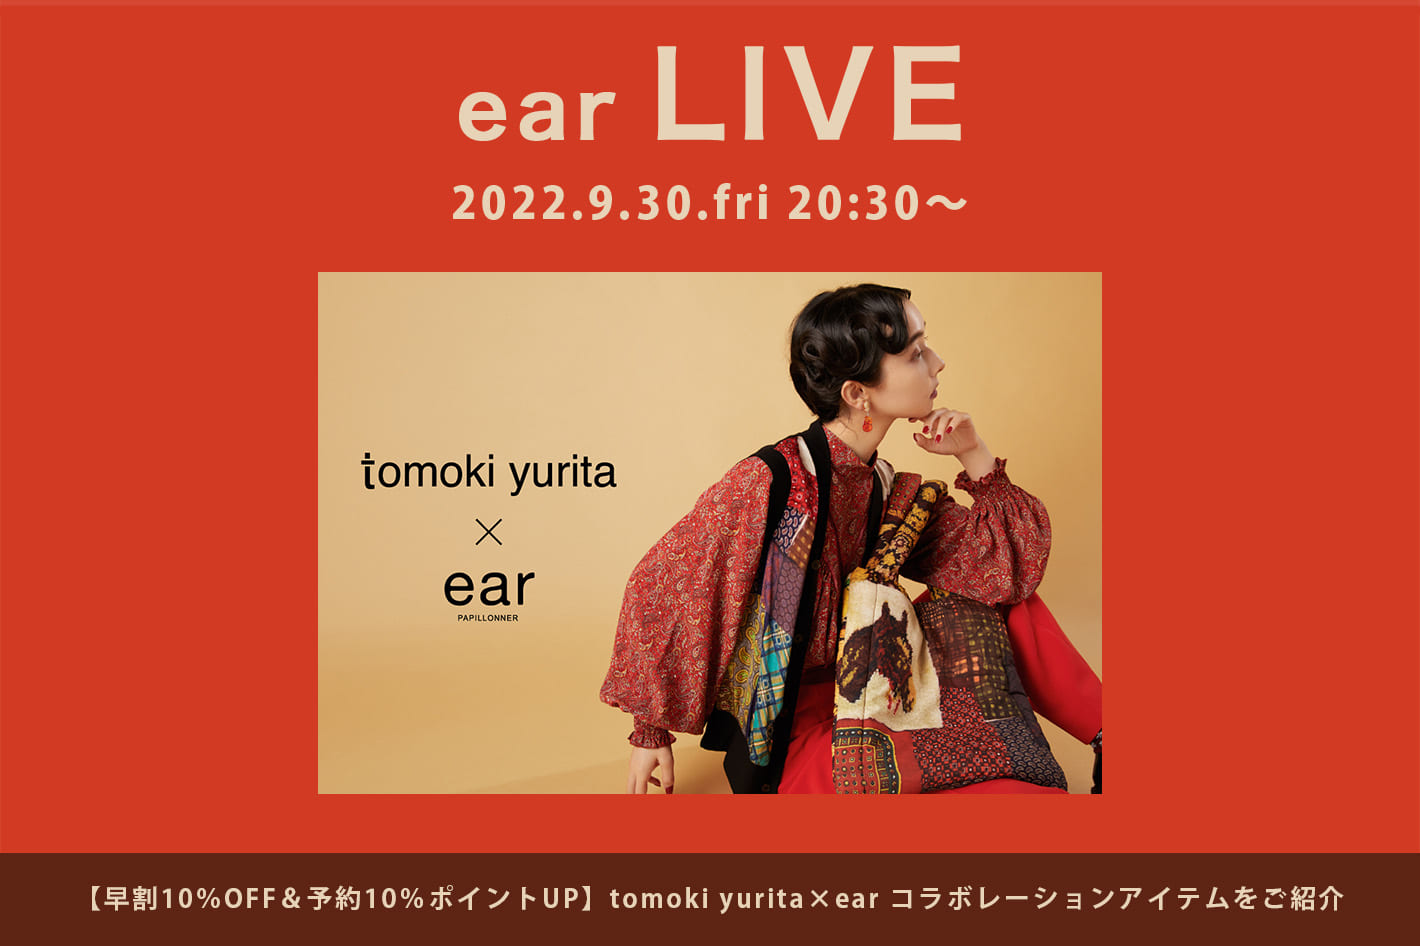 ear PAPILLONNER 9/30 (金) 20:30～ライブ配信 <br>tomoki yurita × SUM1 STYLEのコラボレーションアイテムをご紹介！